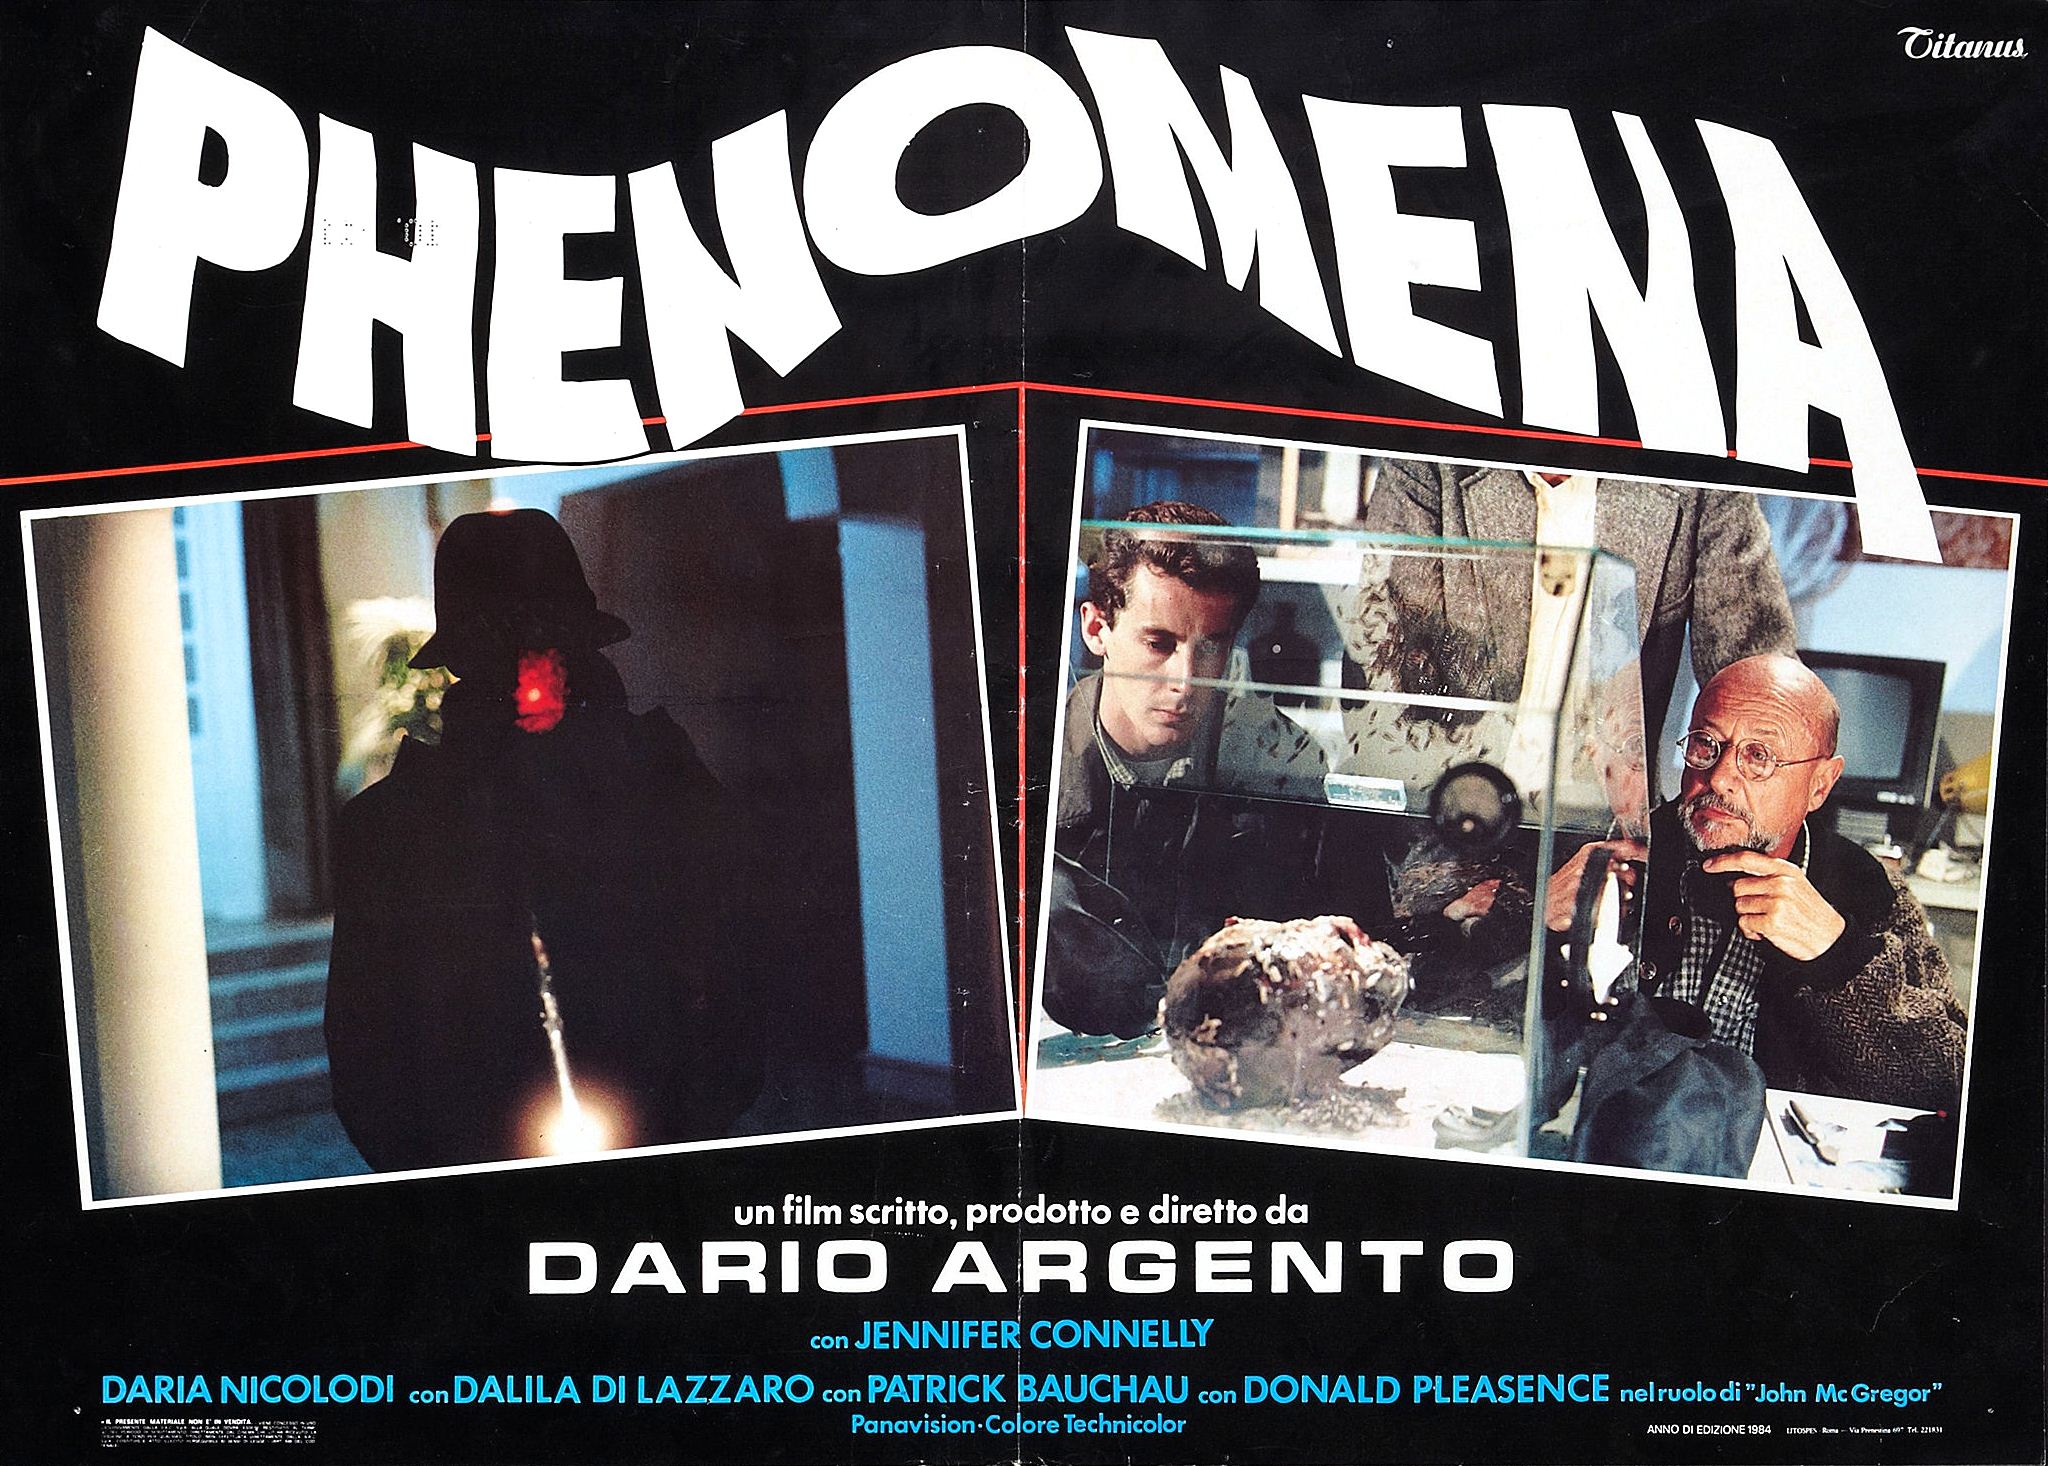 Dario Argento'nun Phenomena Galerisi 4 – phenomena fb 05